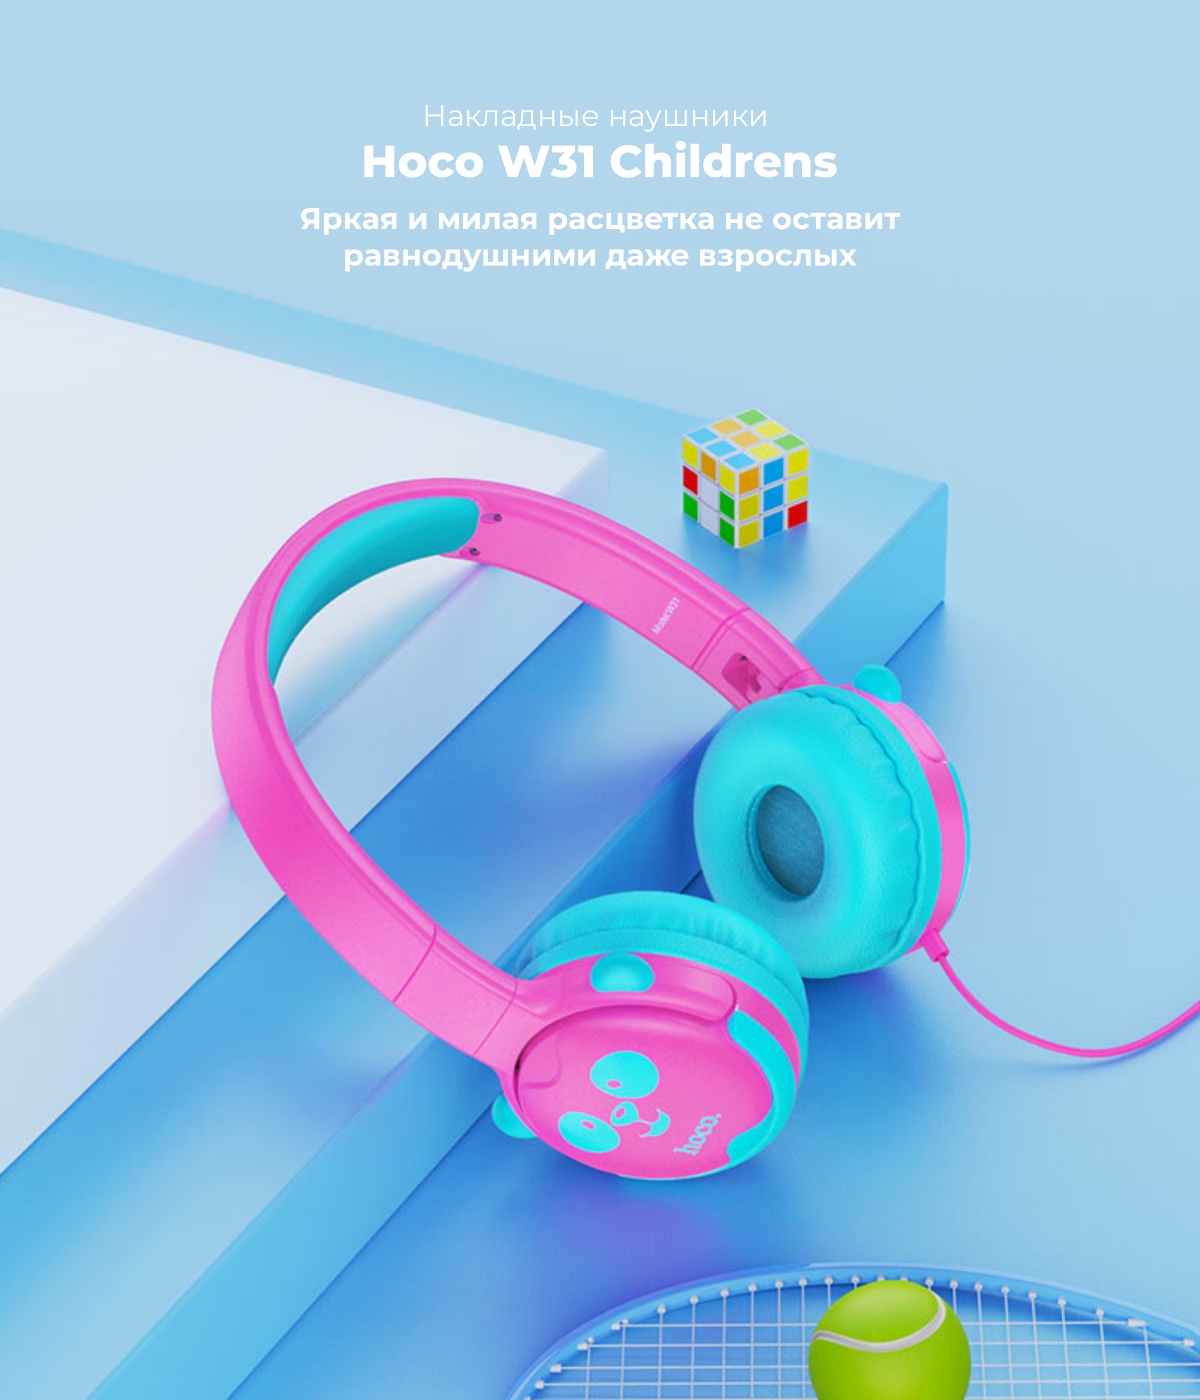 Hoco-W31-Childrens-01